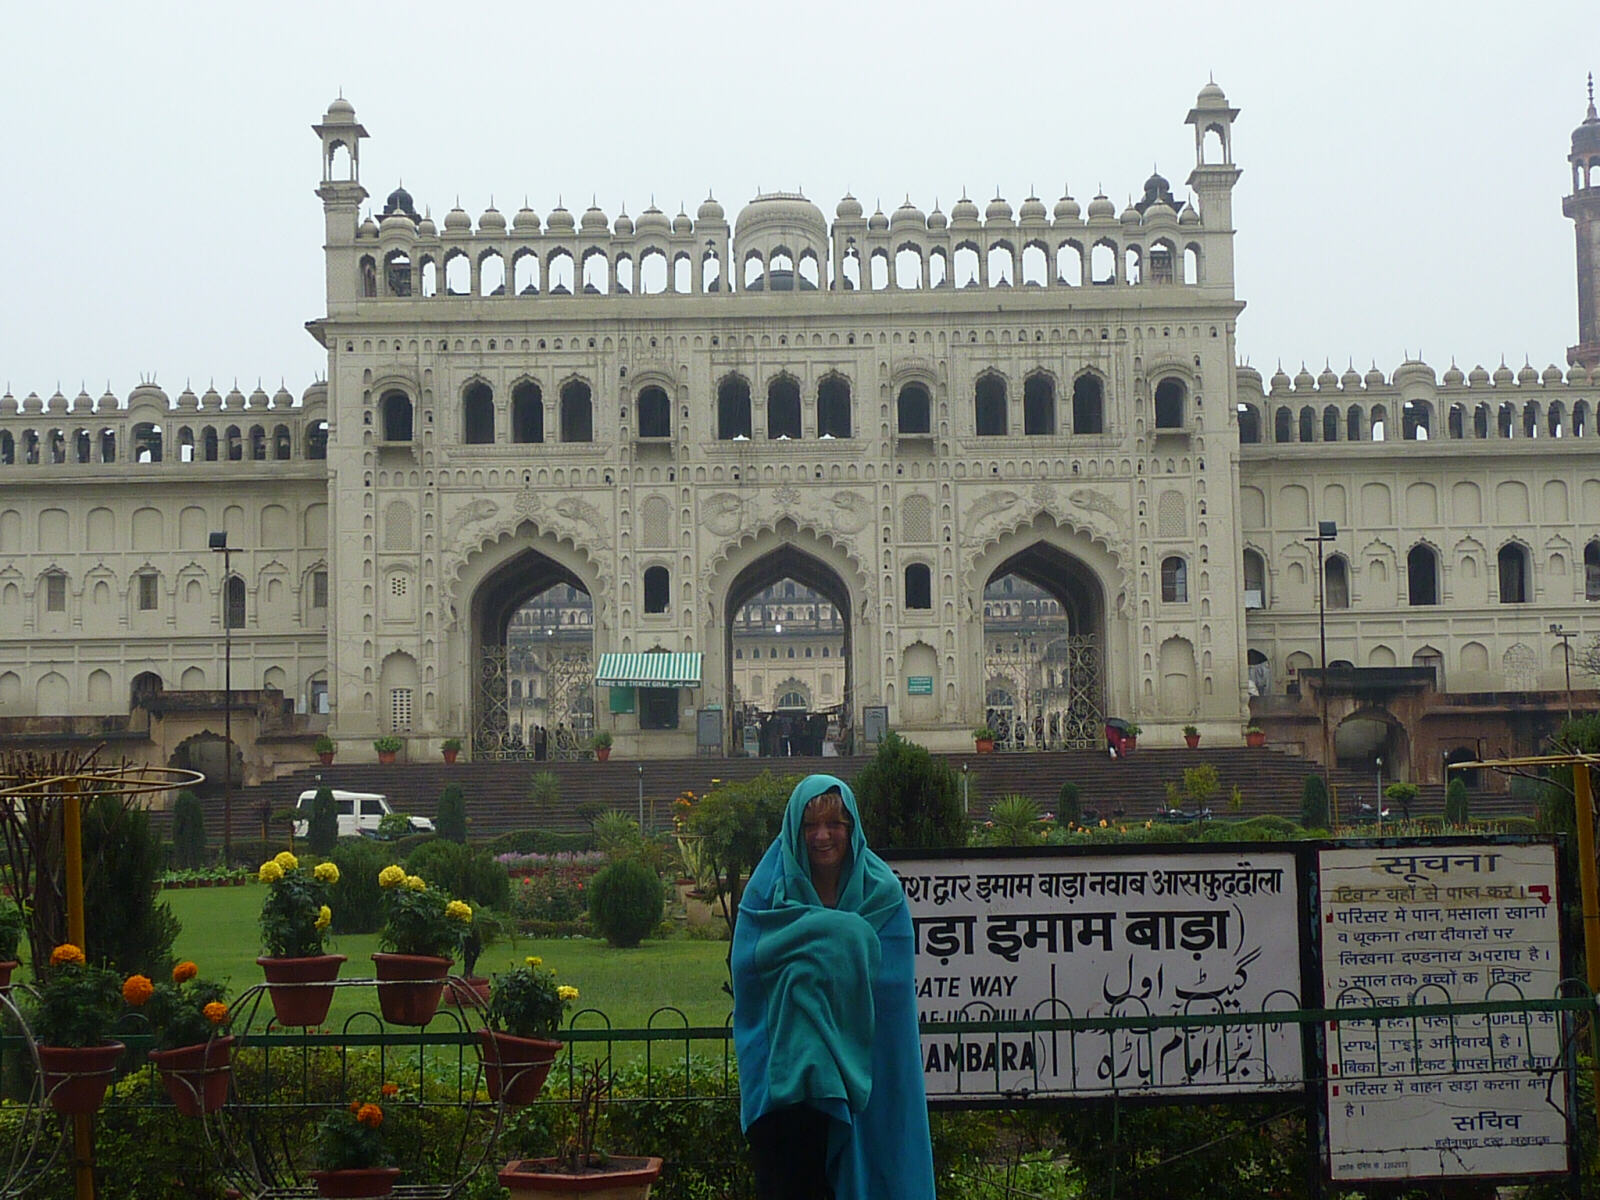 The Bara Imambra in Lucknow, Uttar Pradesh, India